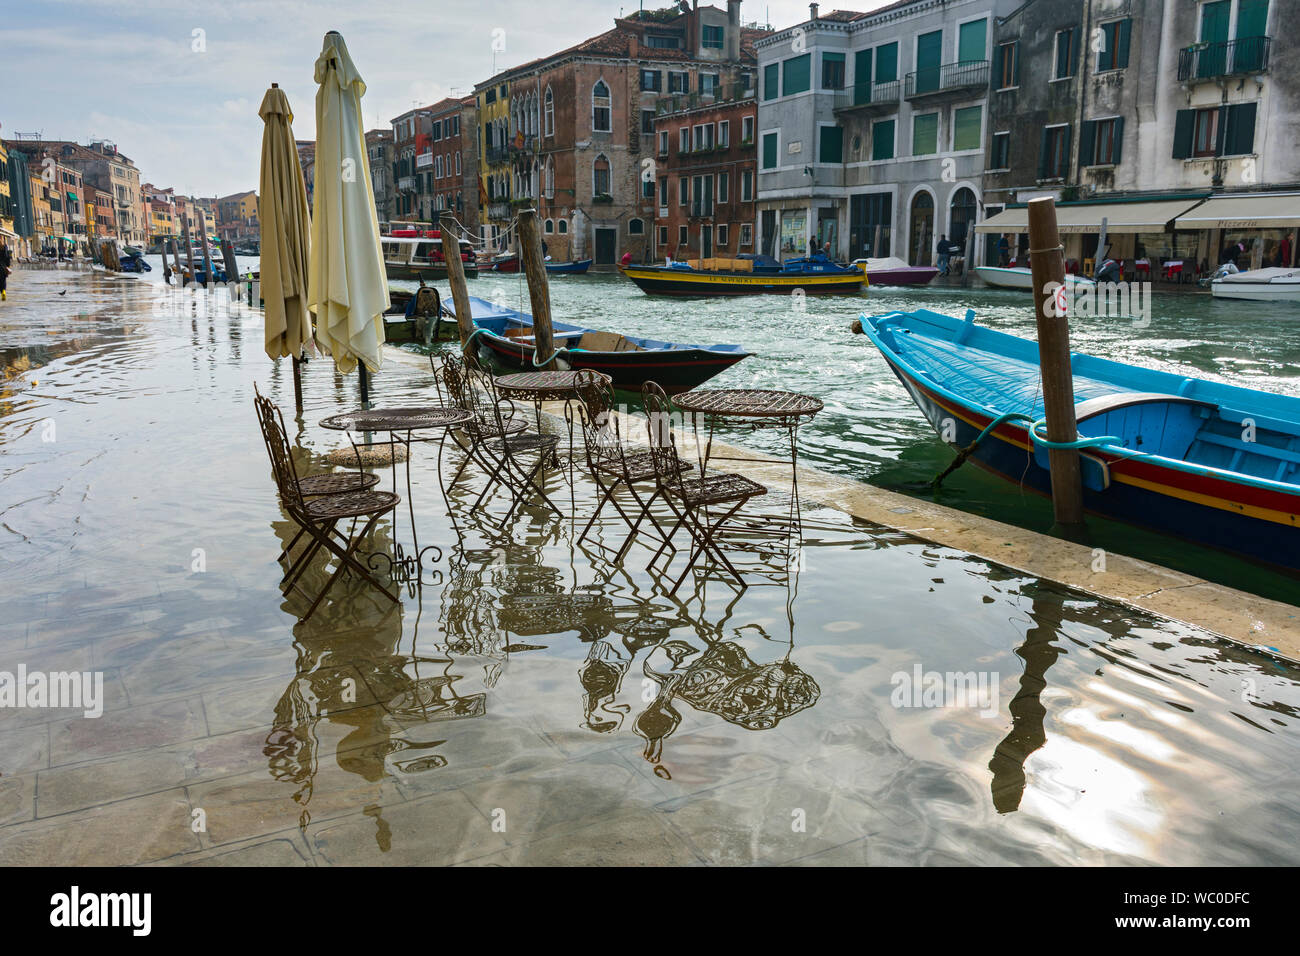 The Fondamenta Cannaregio, by the Canale di Cannaregio, flooded during an acqua alta (high water) event, Venice, Italy Stock Photo